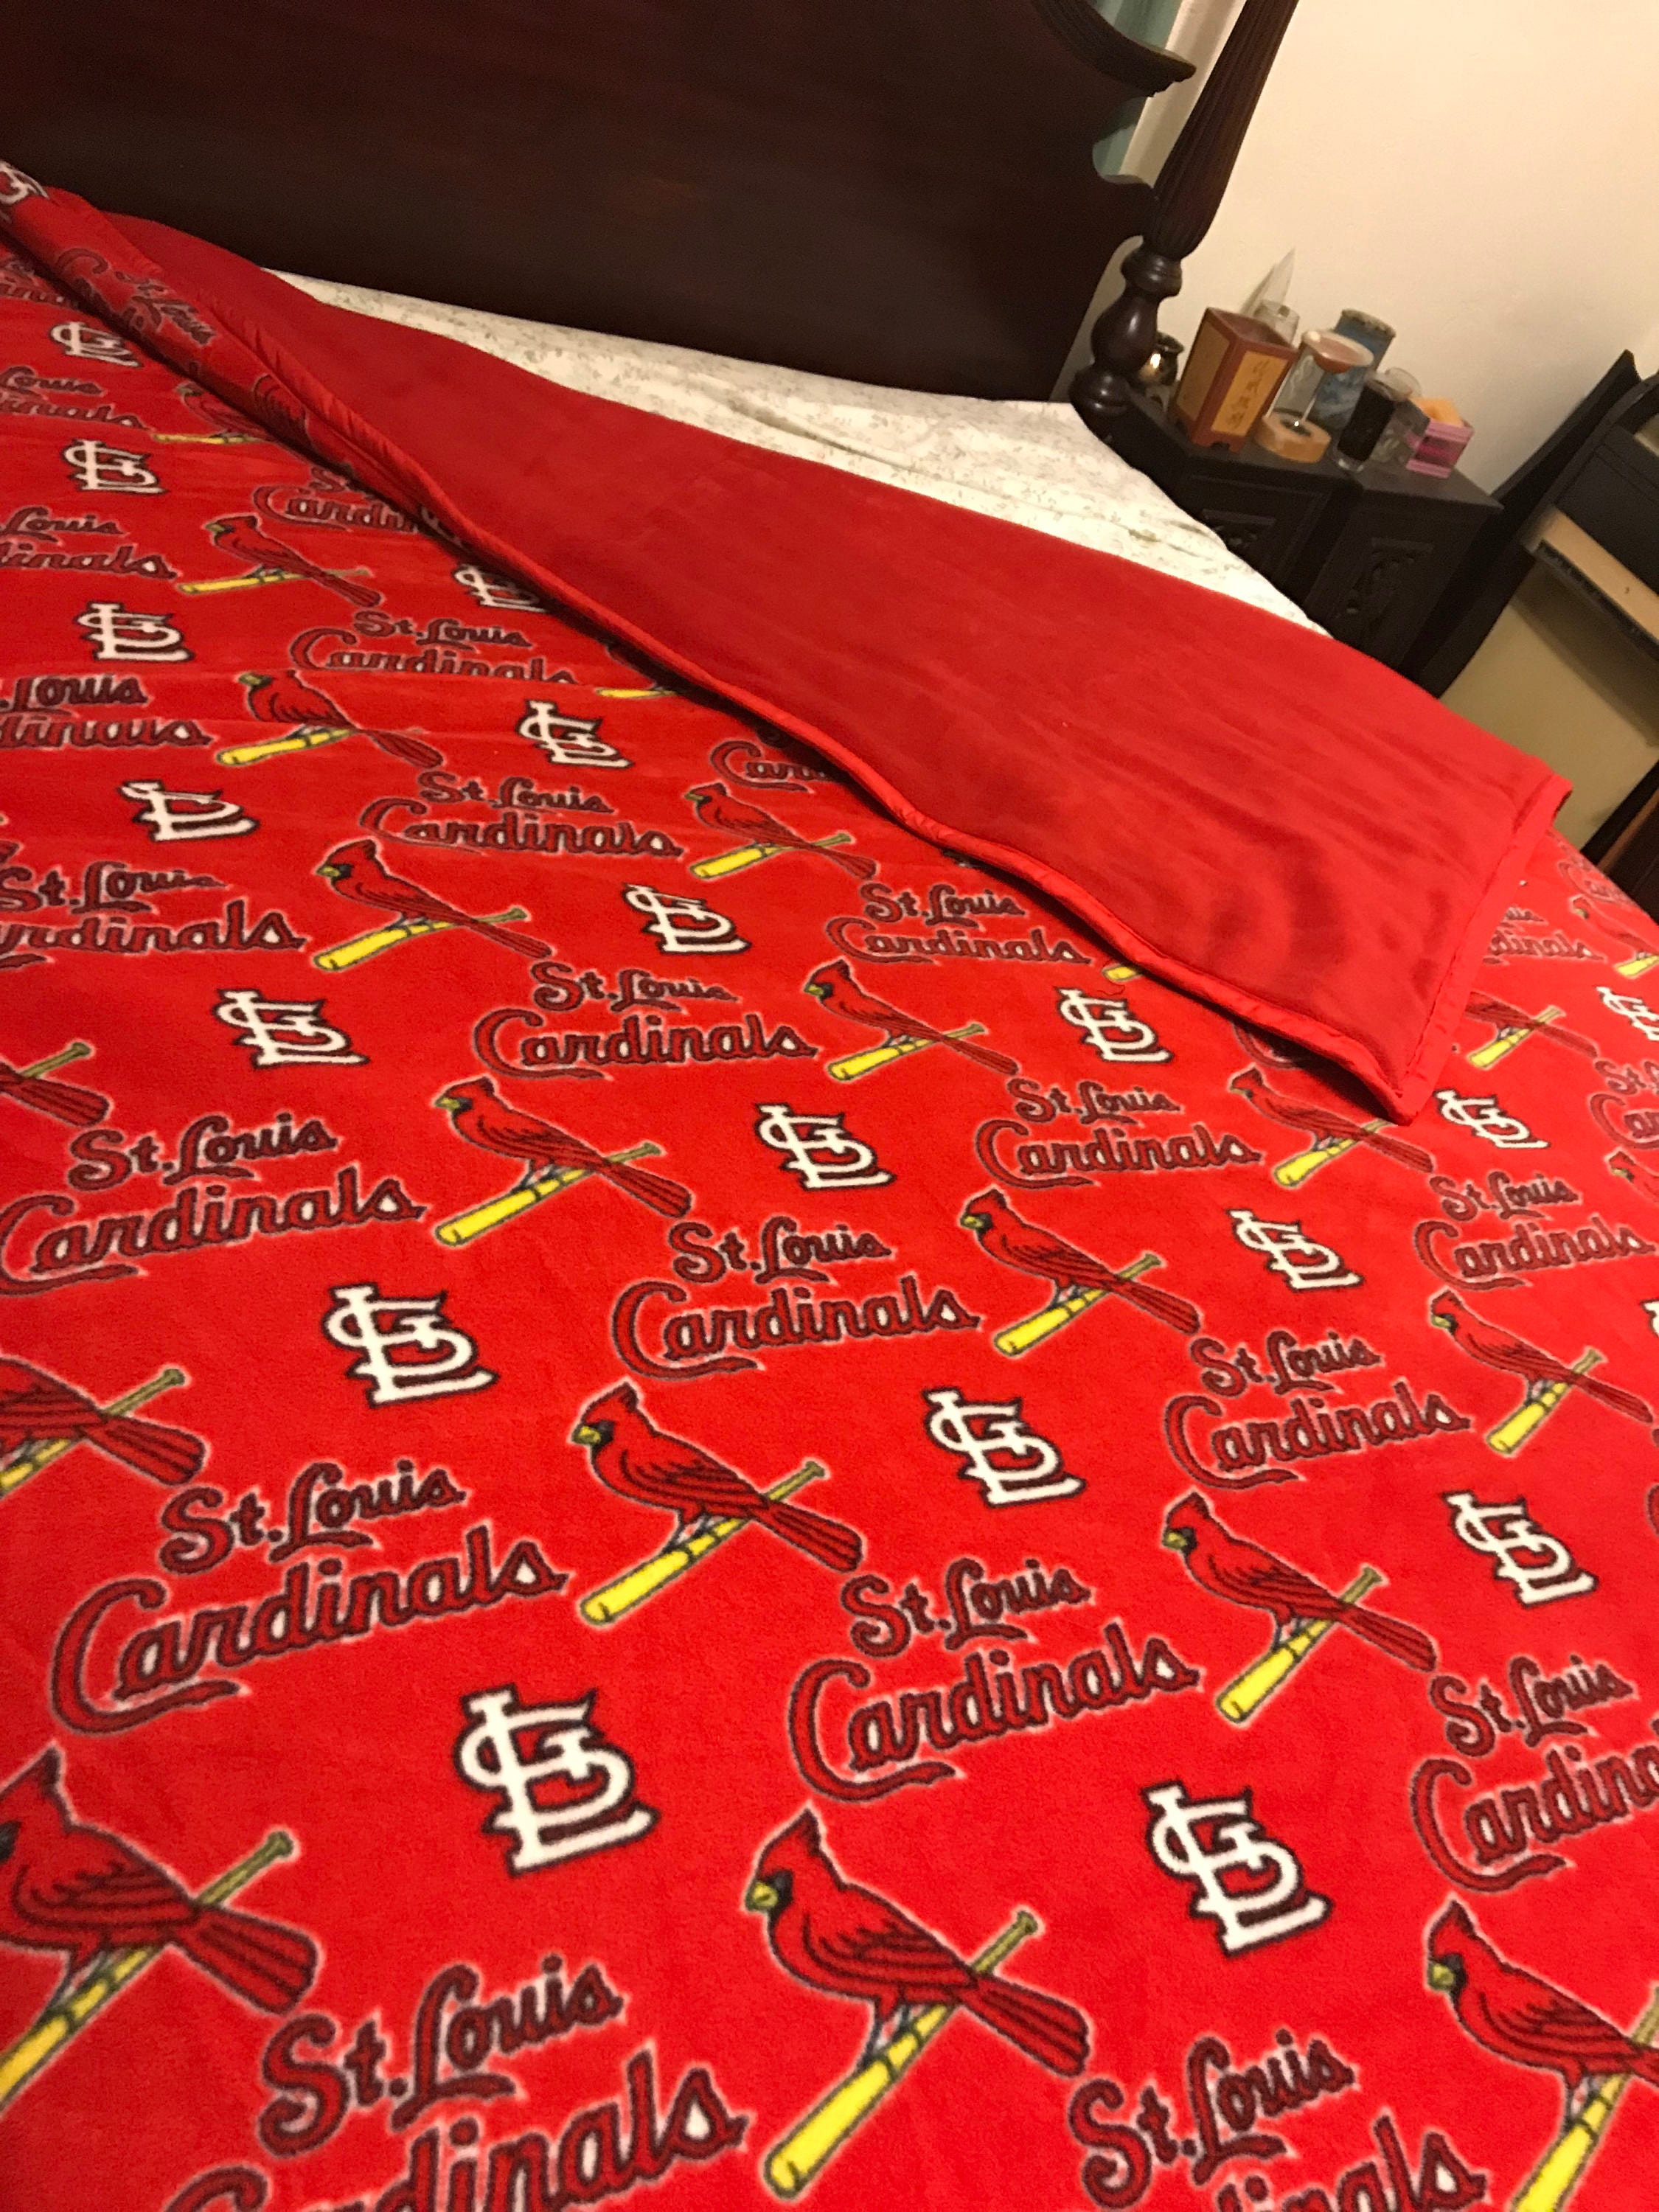 st louis cardinals blanket